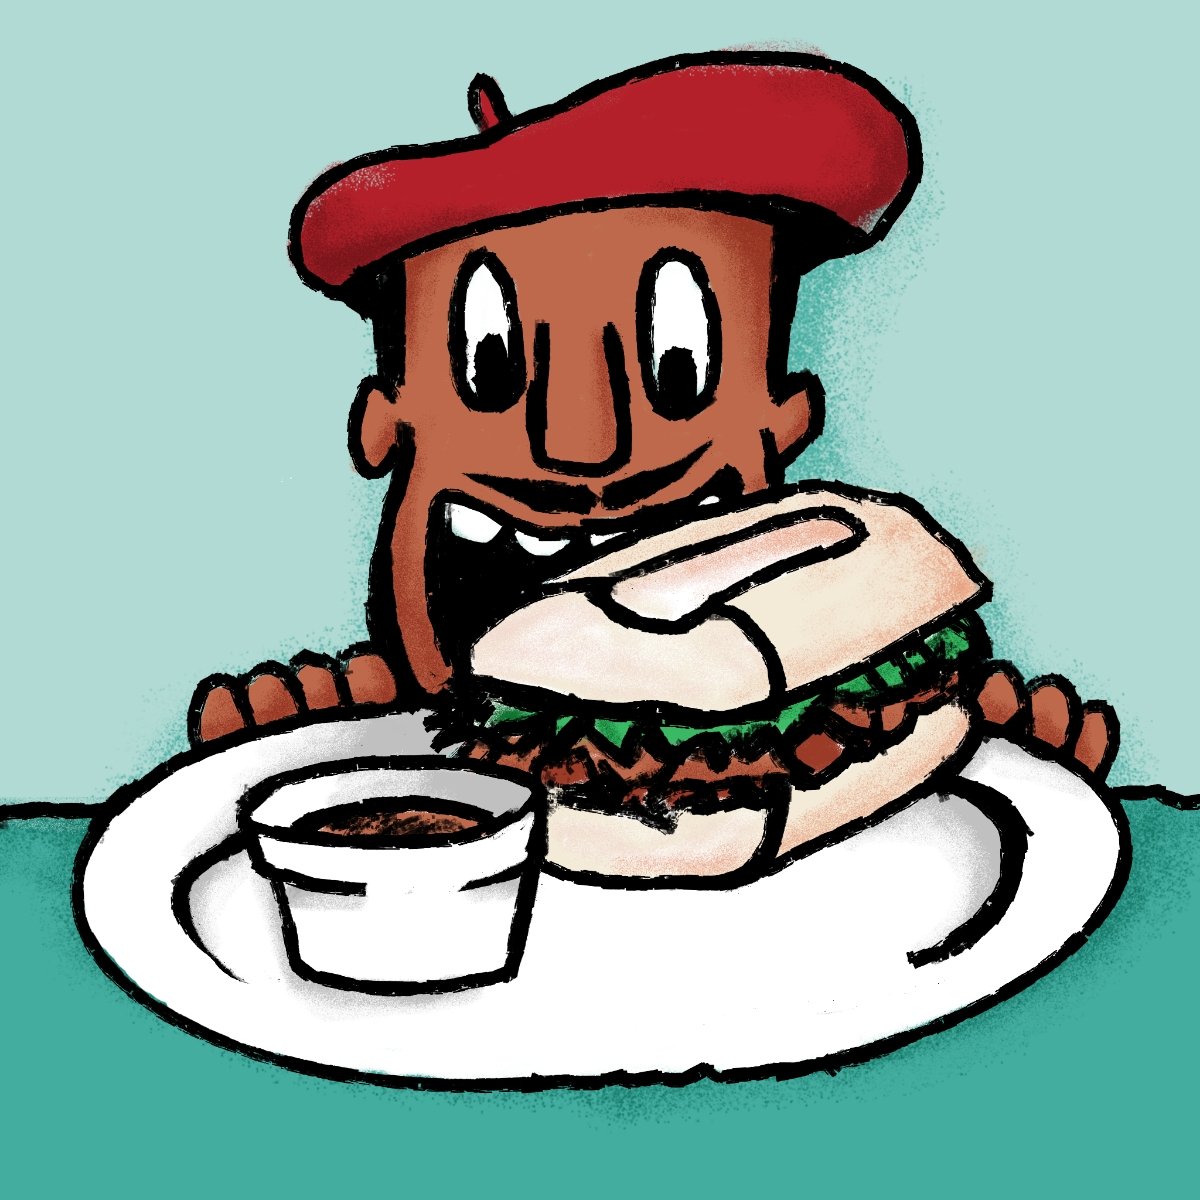 French Dip sandwich illustration